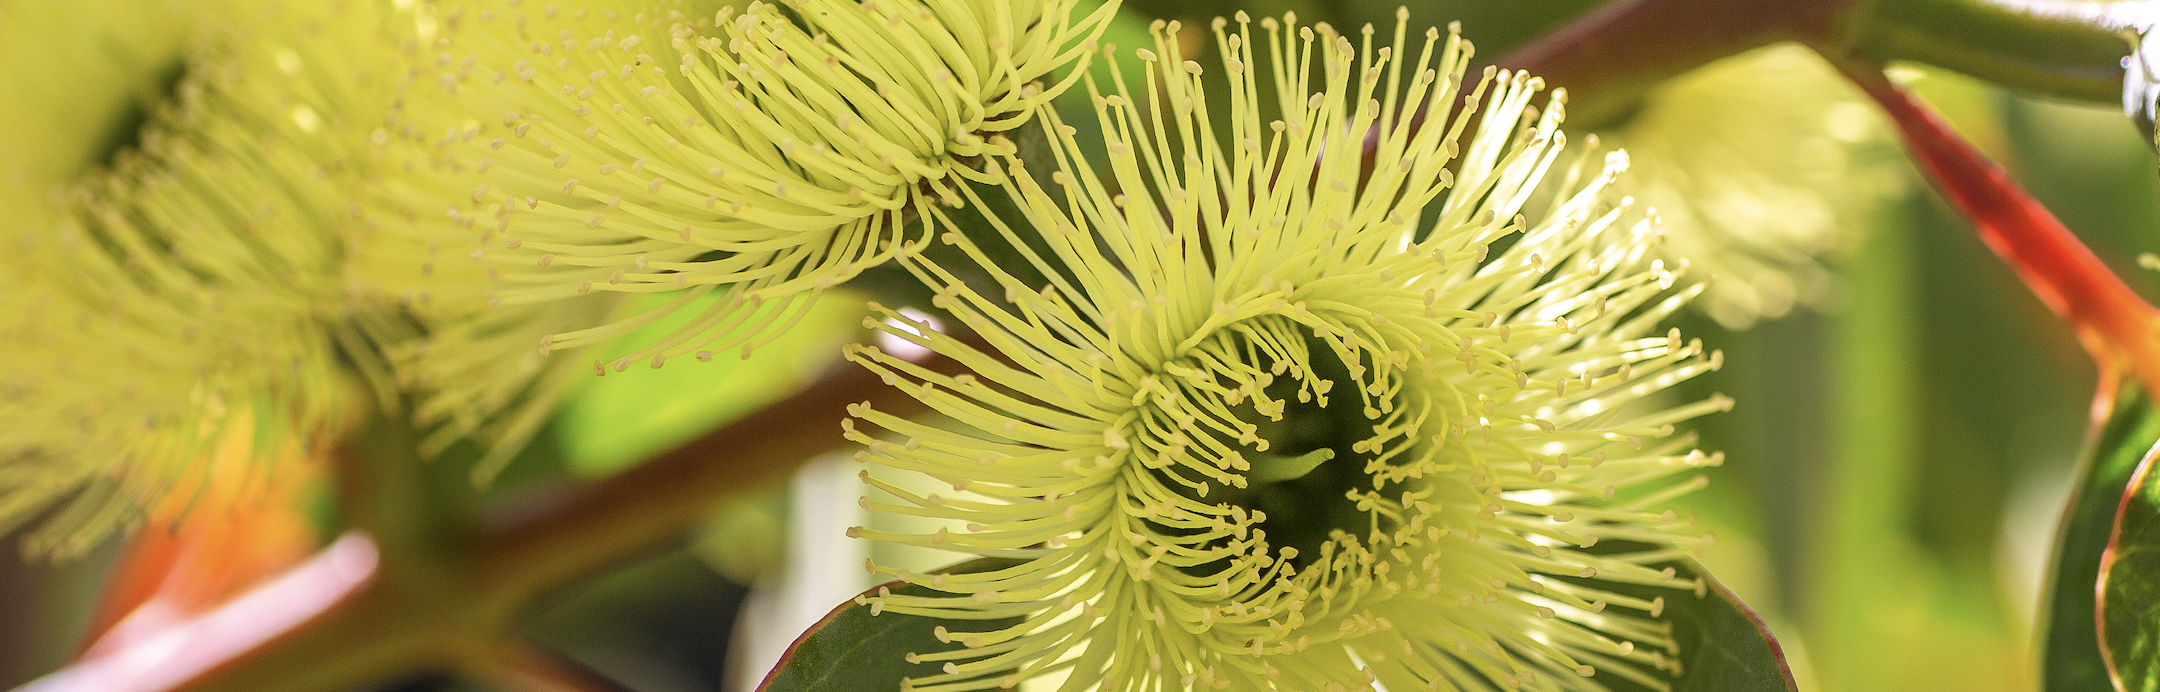 eucalyptus yellow flower